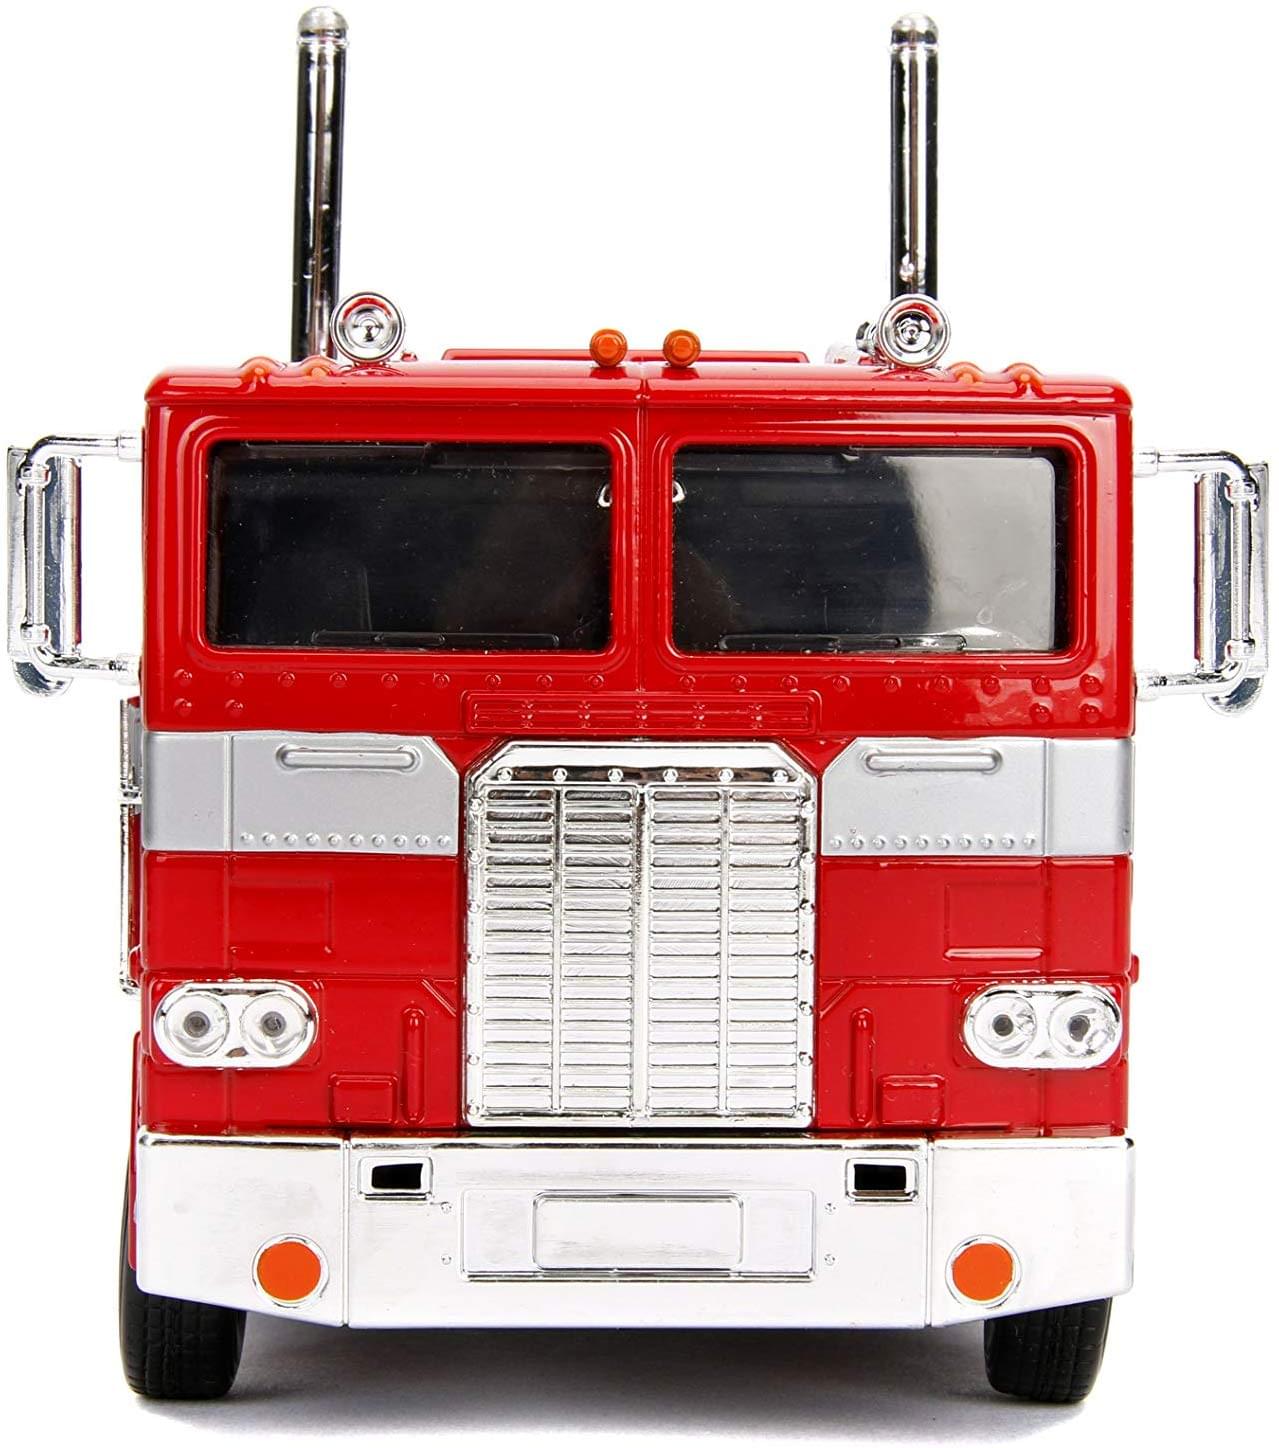 Transformers G1 Optimus Prime Truck 1:24 Die Cast Vehicle